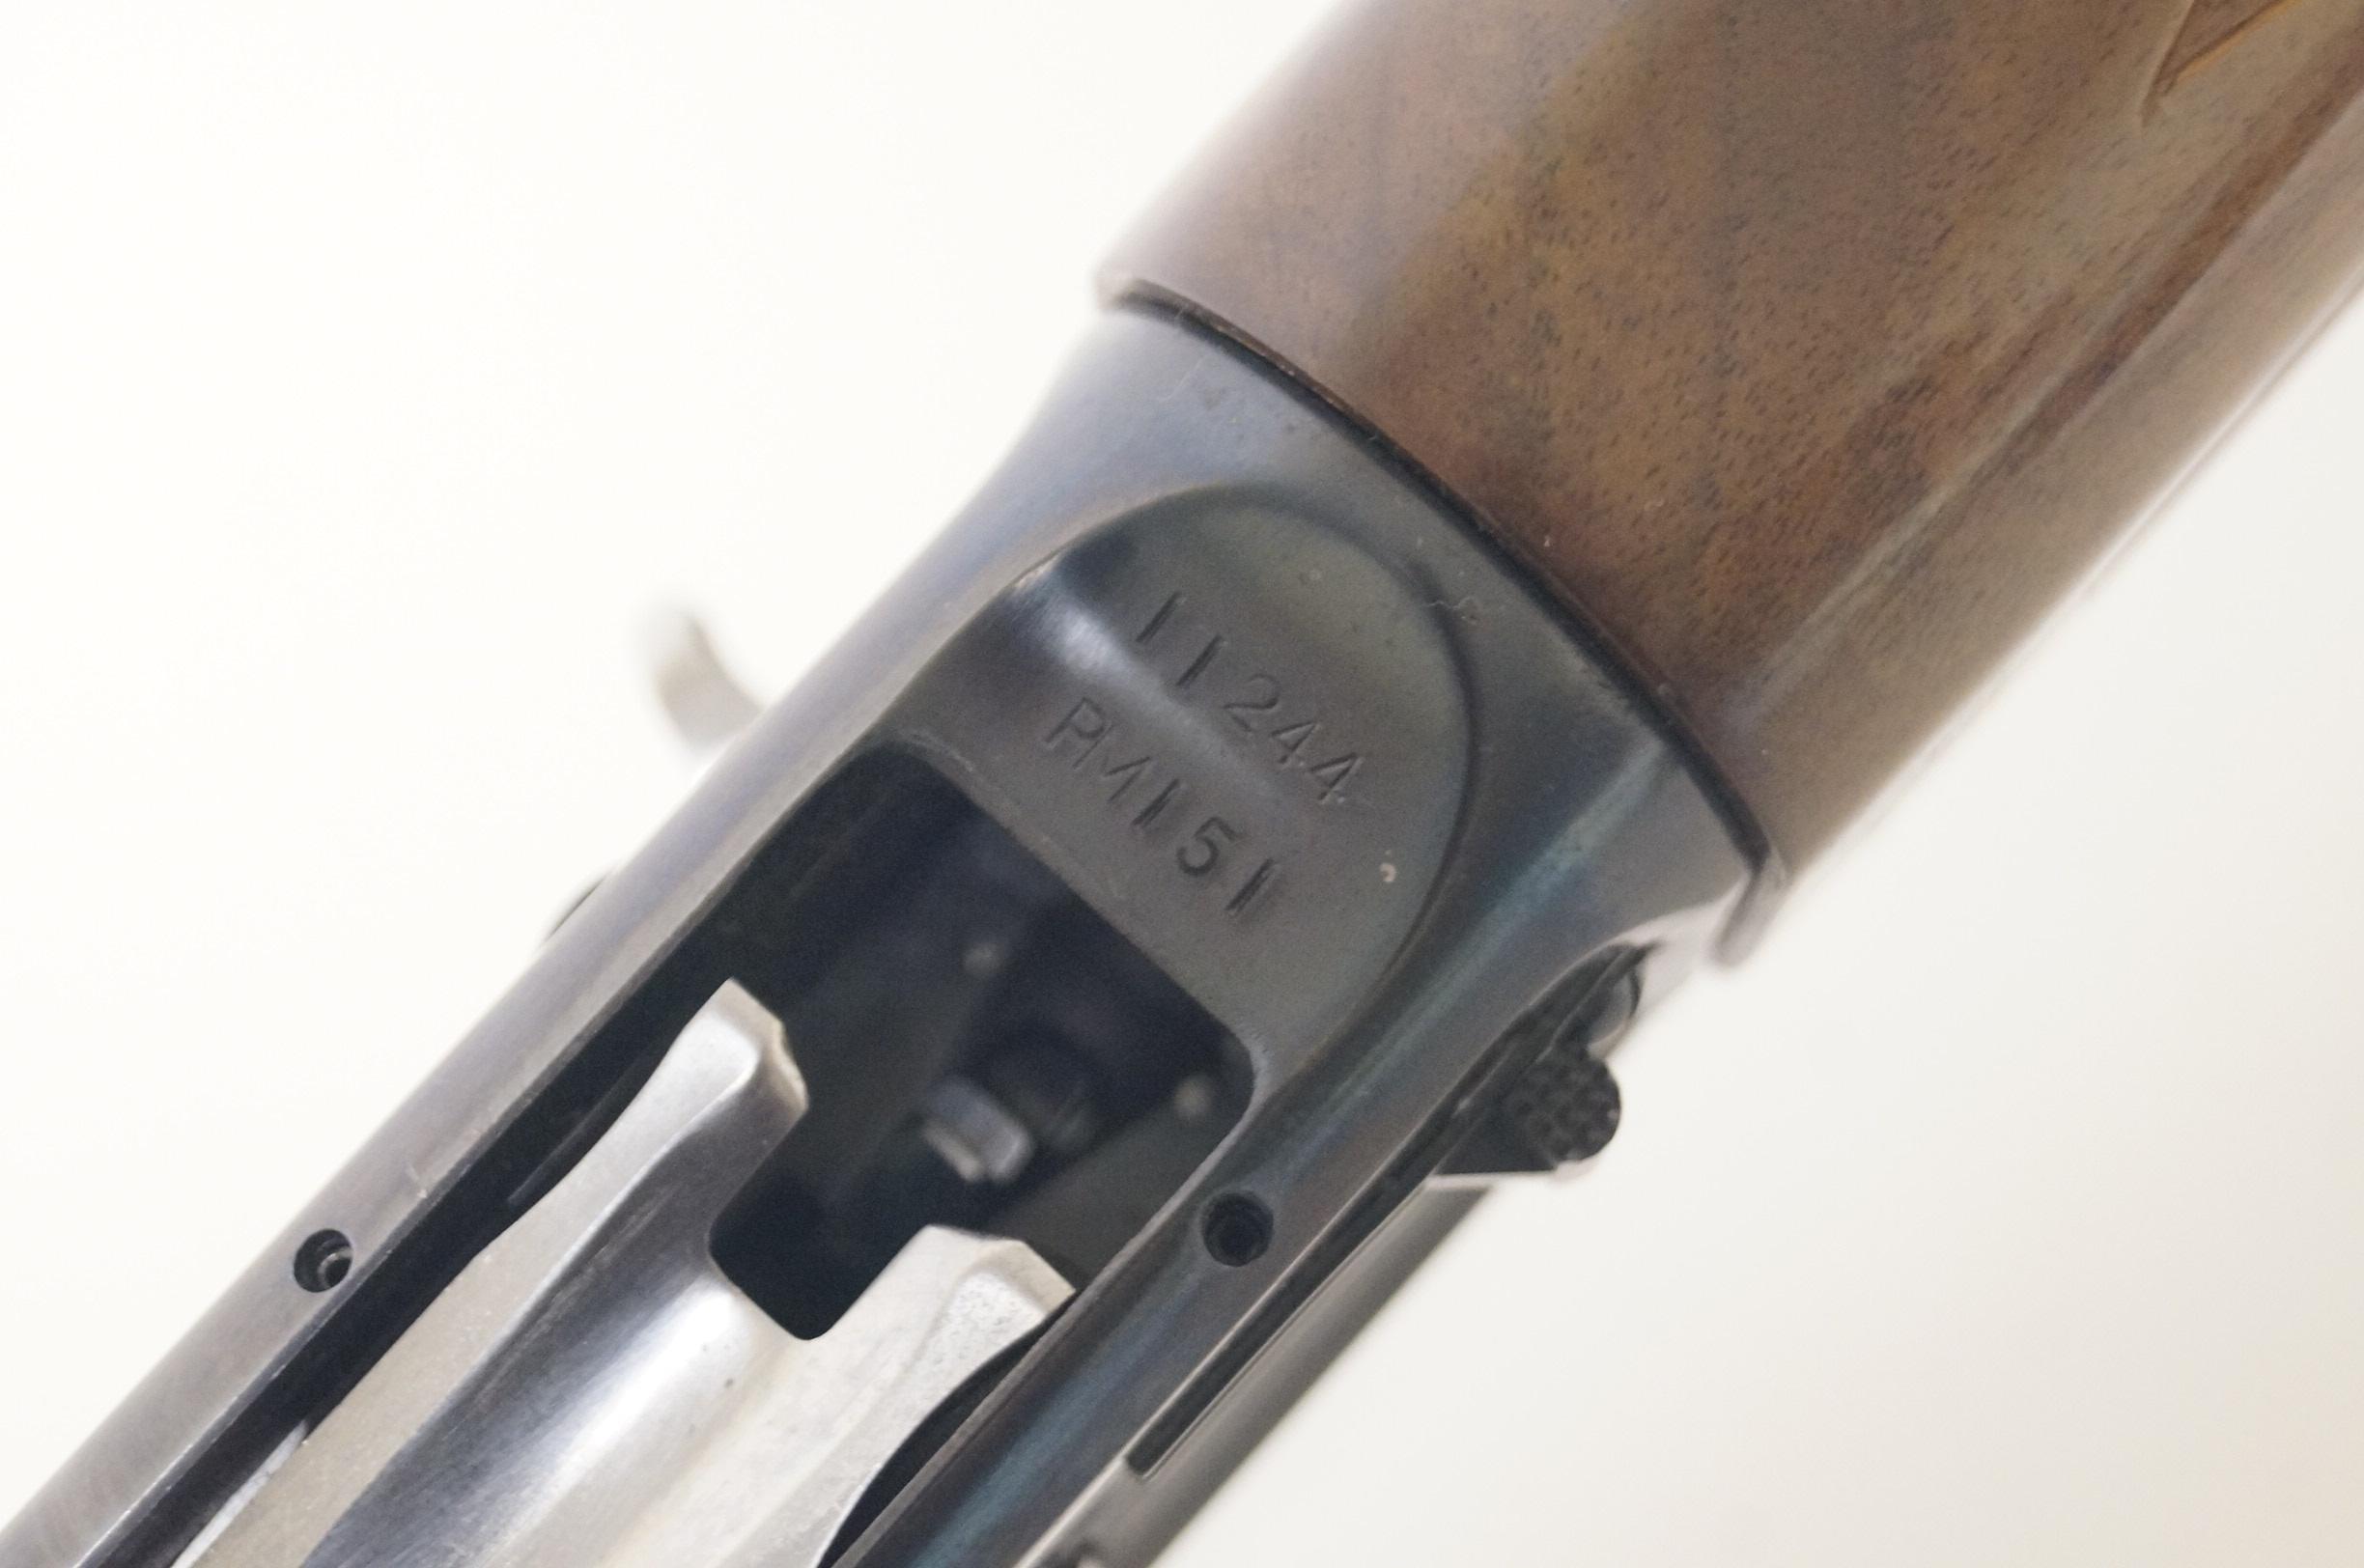 Browning Magnum Twelve 12ga. Semi-Automatic Shotgun